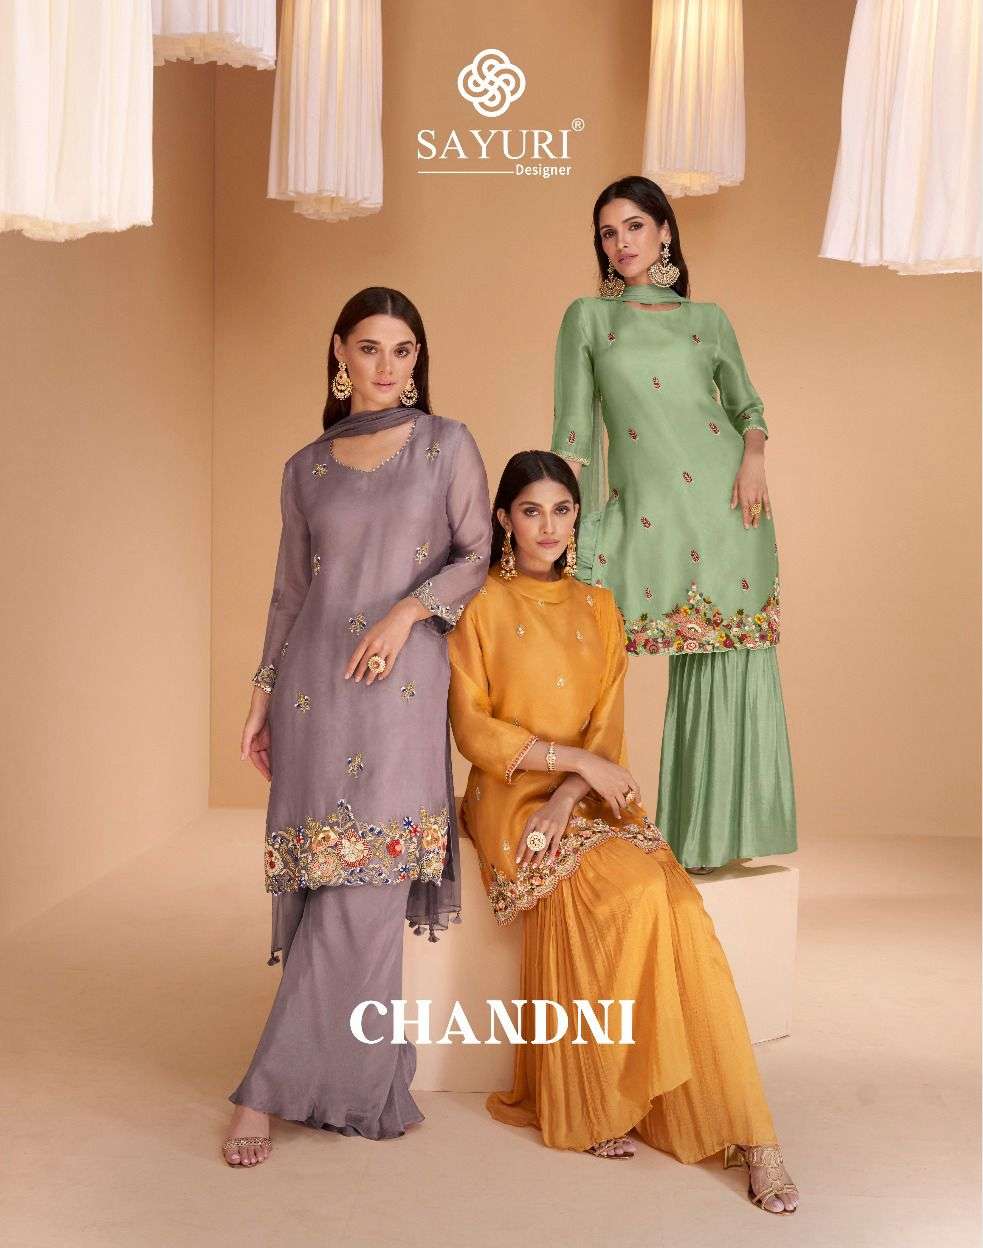 Sayuri Chandni Designer Style Sharara Wedding Wear Dress New Designs